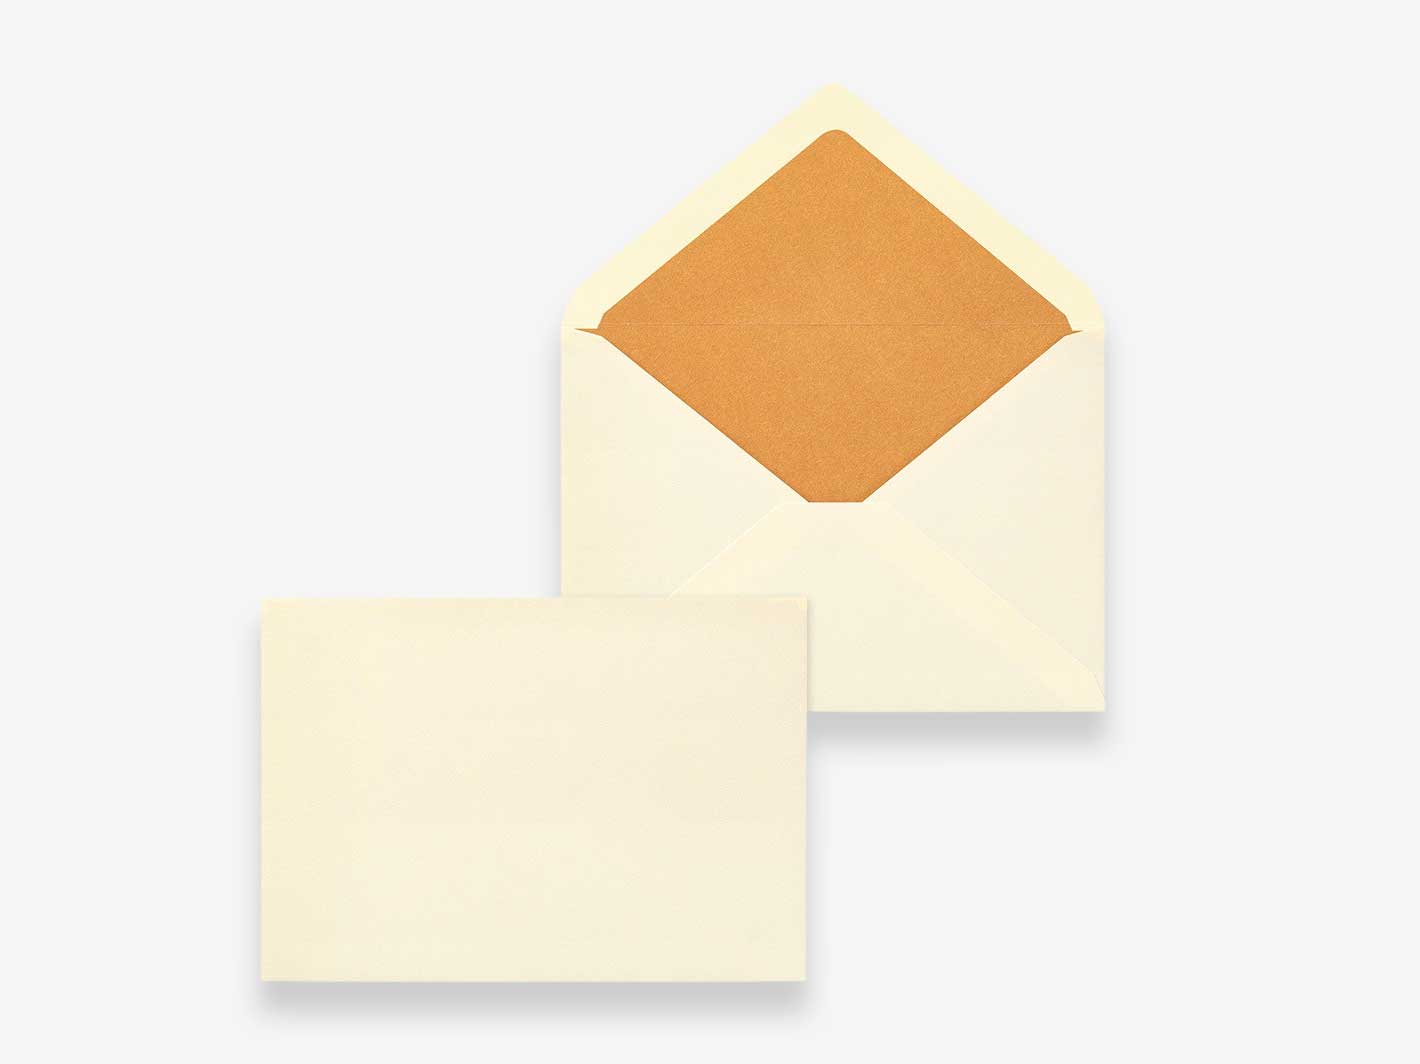 Gold Envelopes